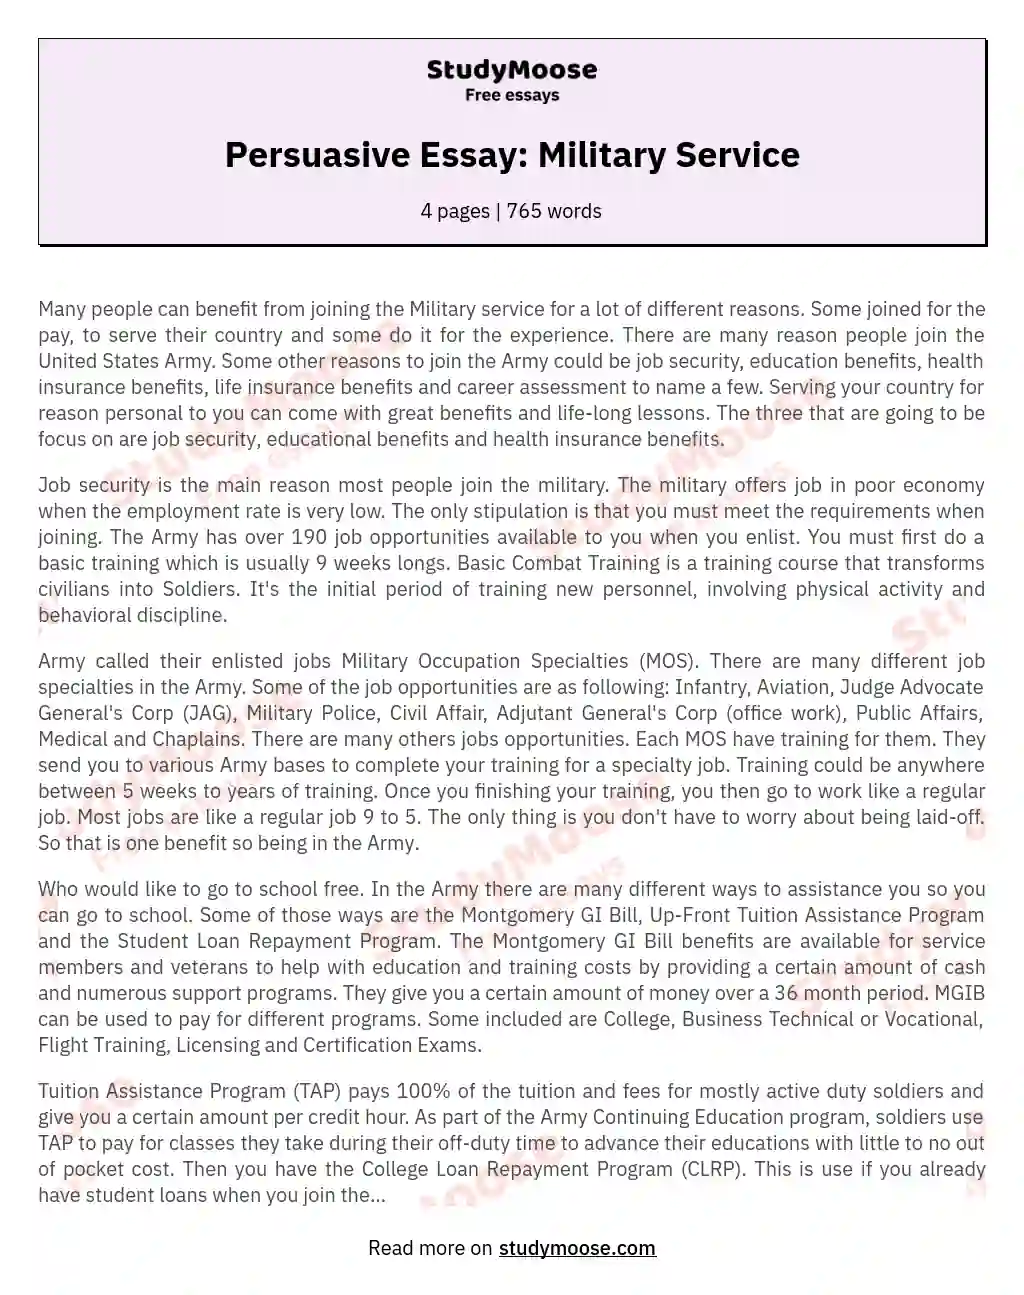 essay topics on military